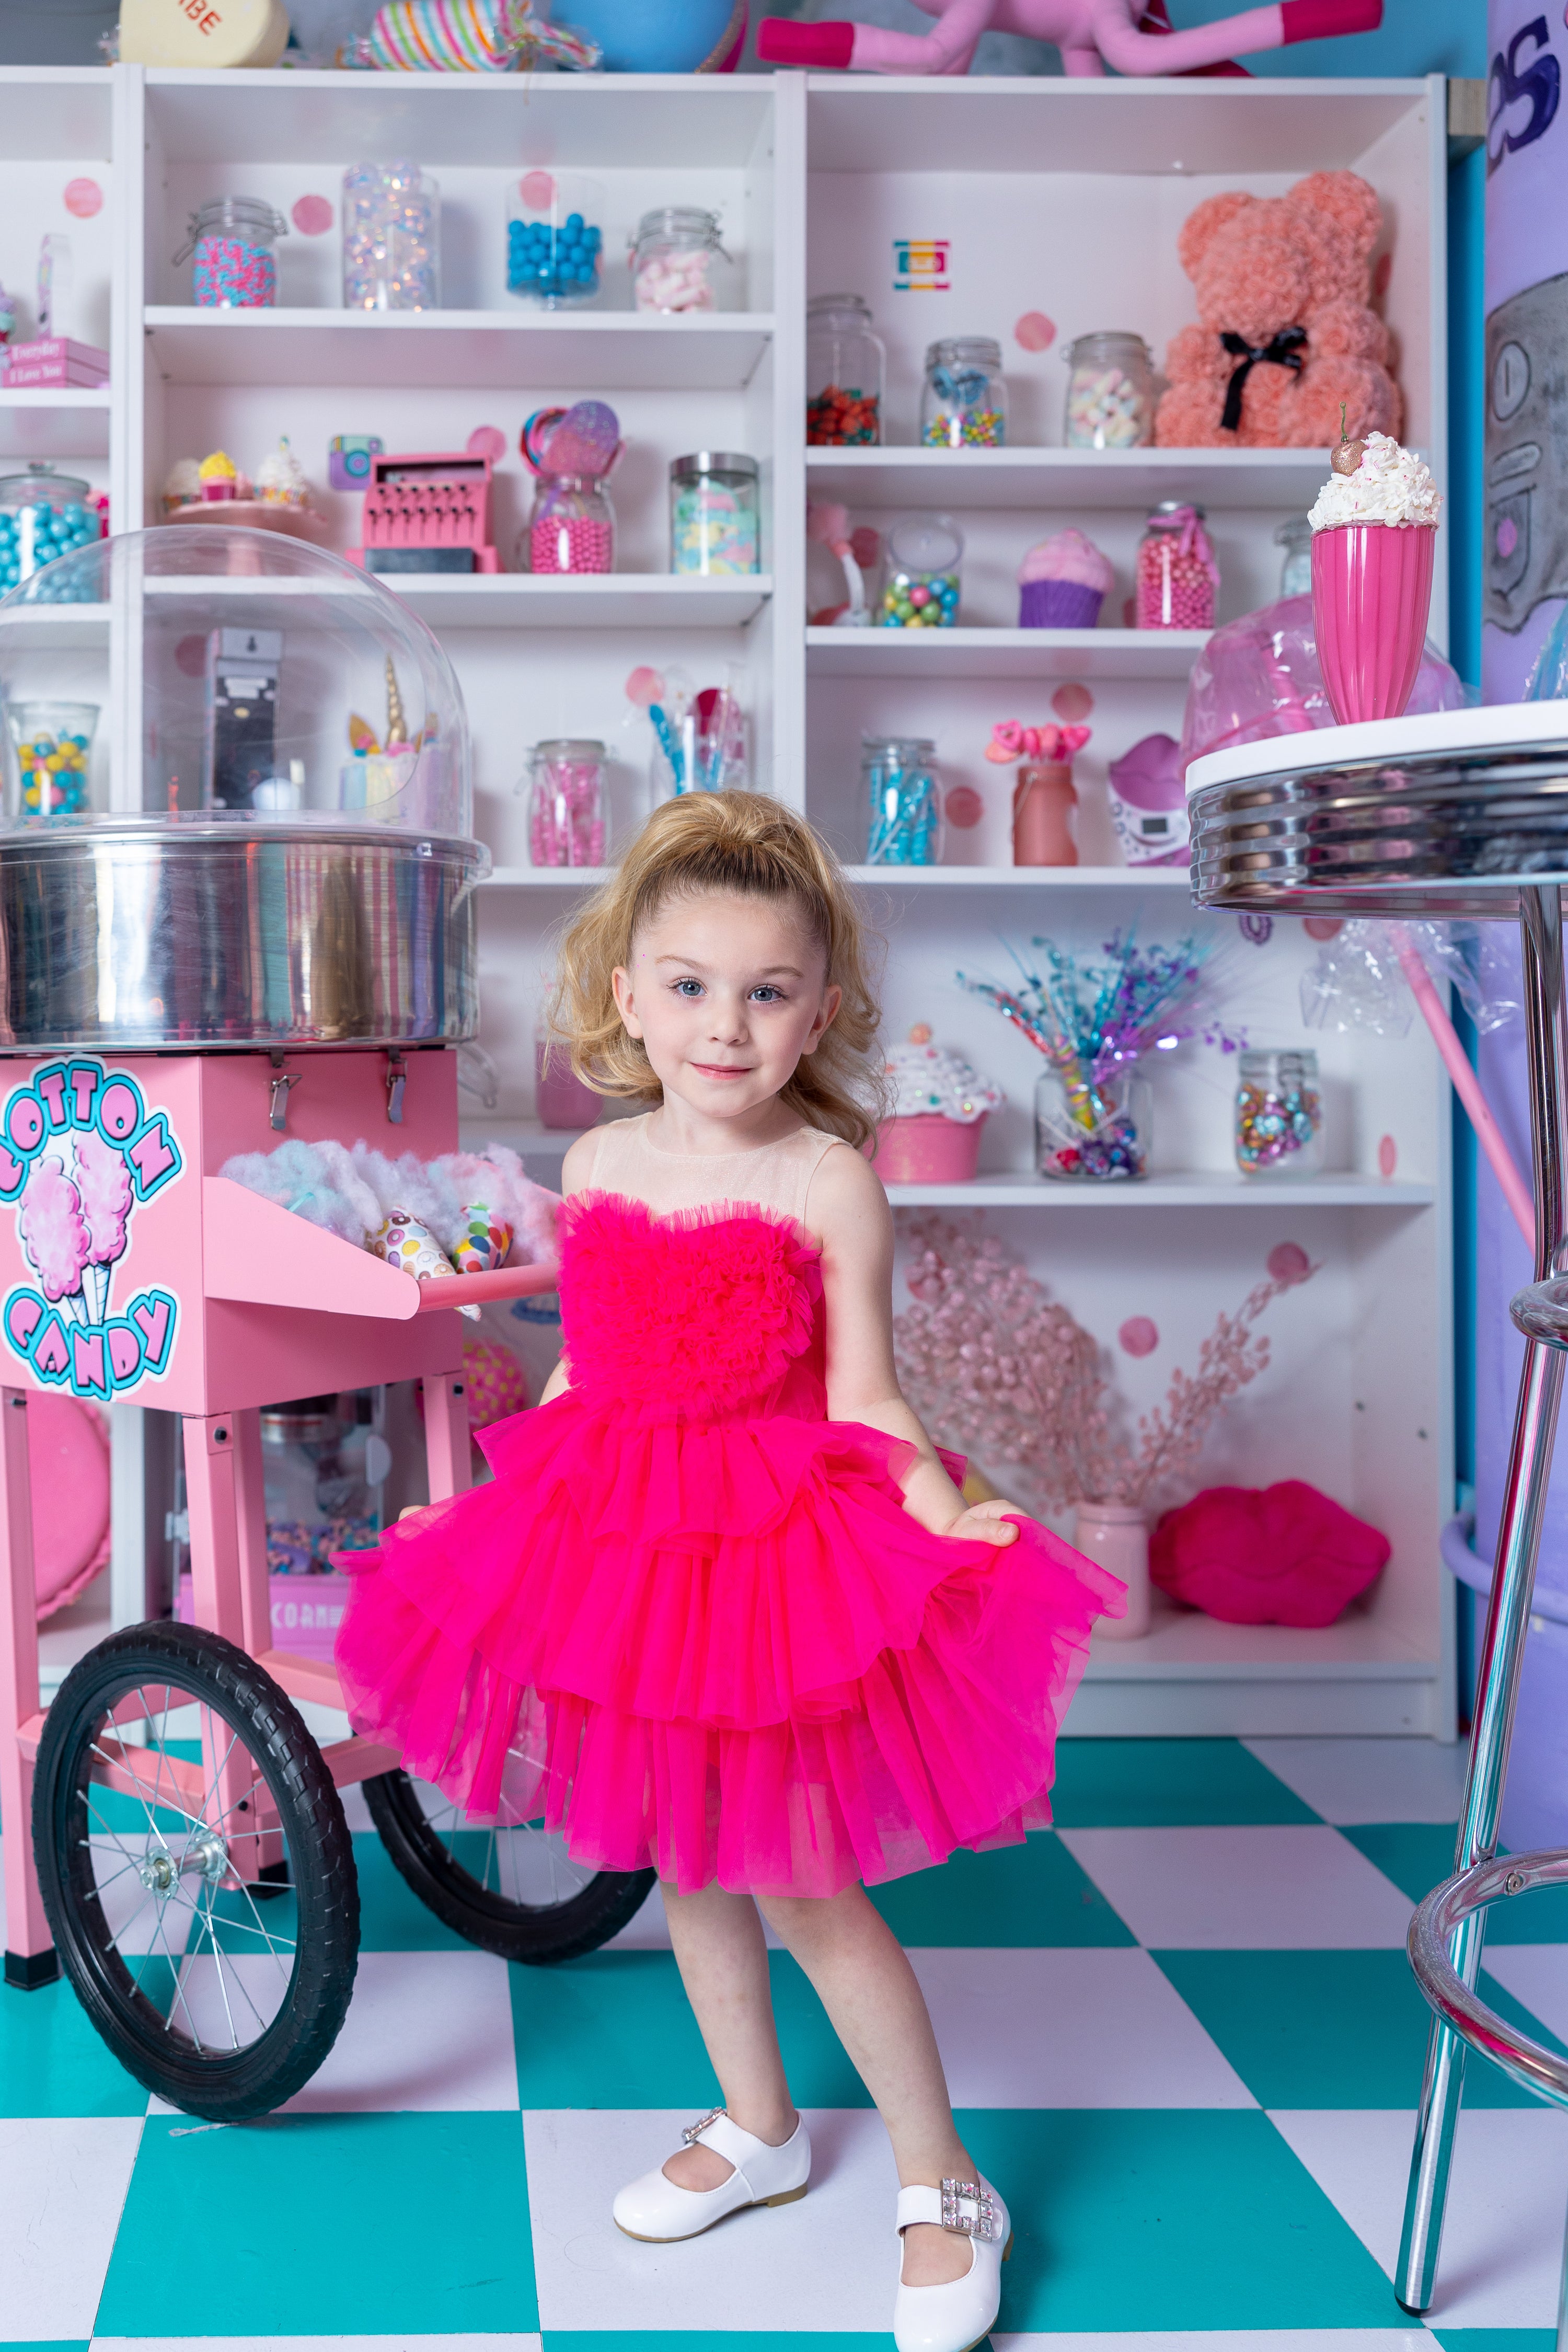 Moschino Baby Girls Pink Teddy Bear Toy Logo Short Sleeve Dress